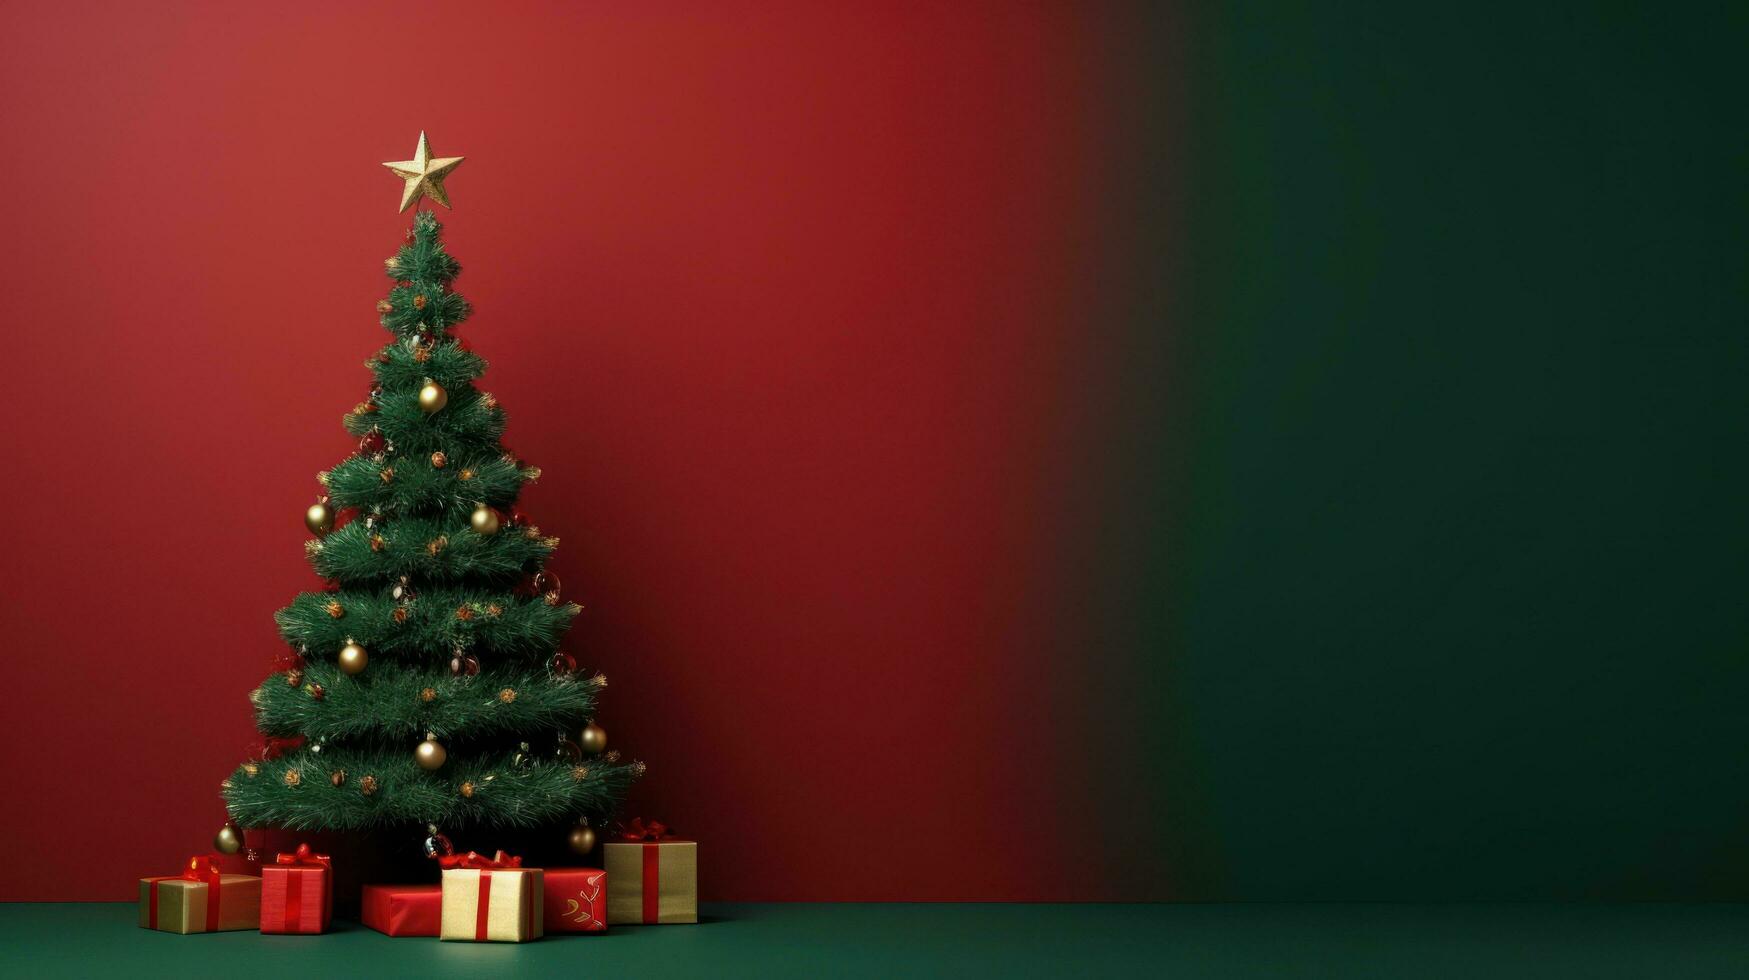 Minimalist background with Christmas tree photo